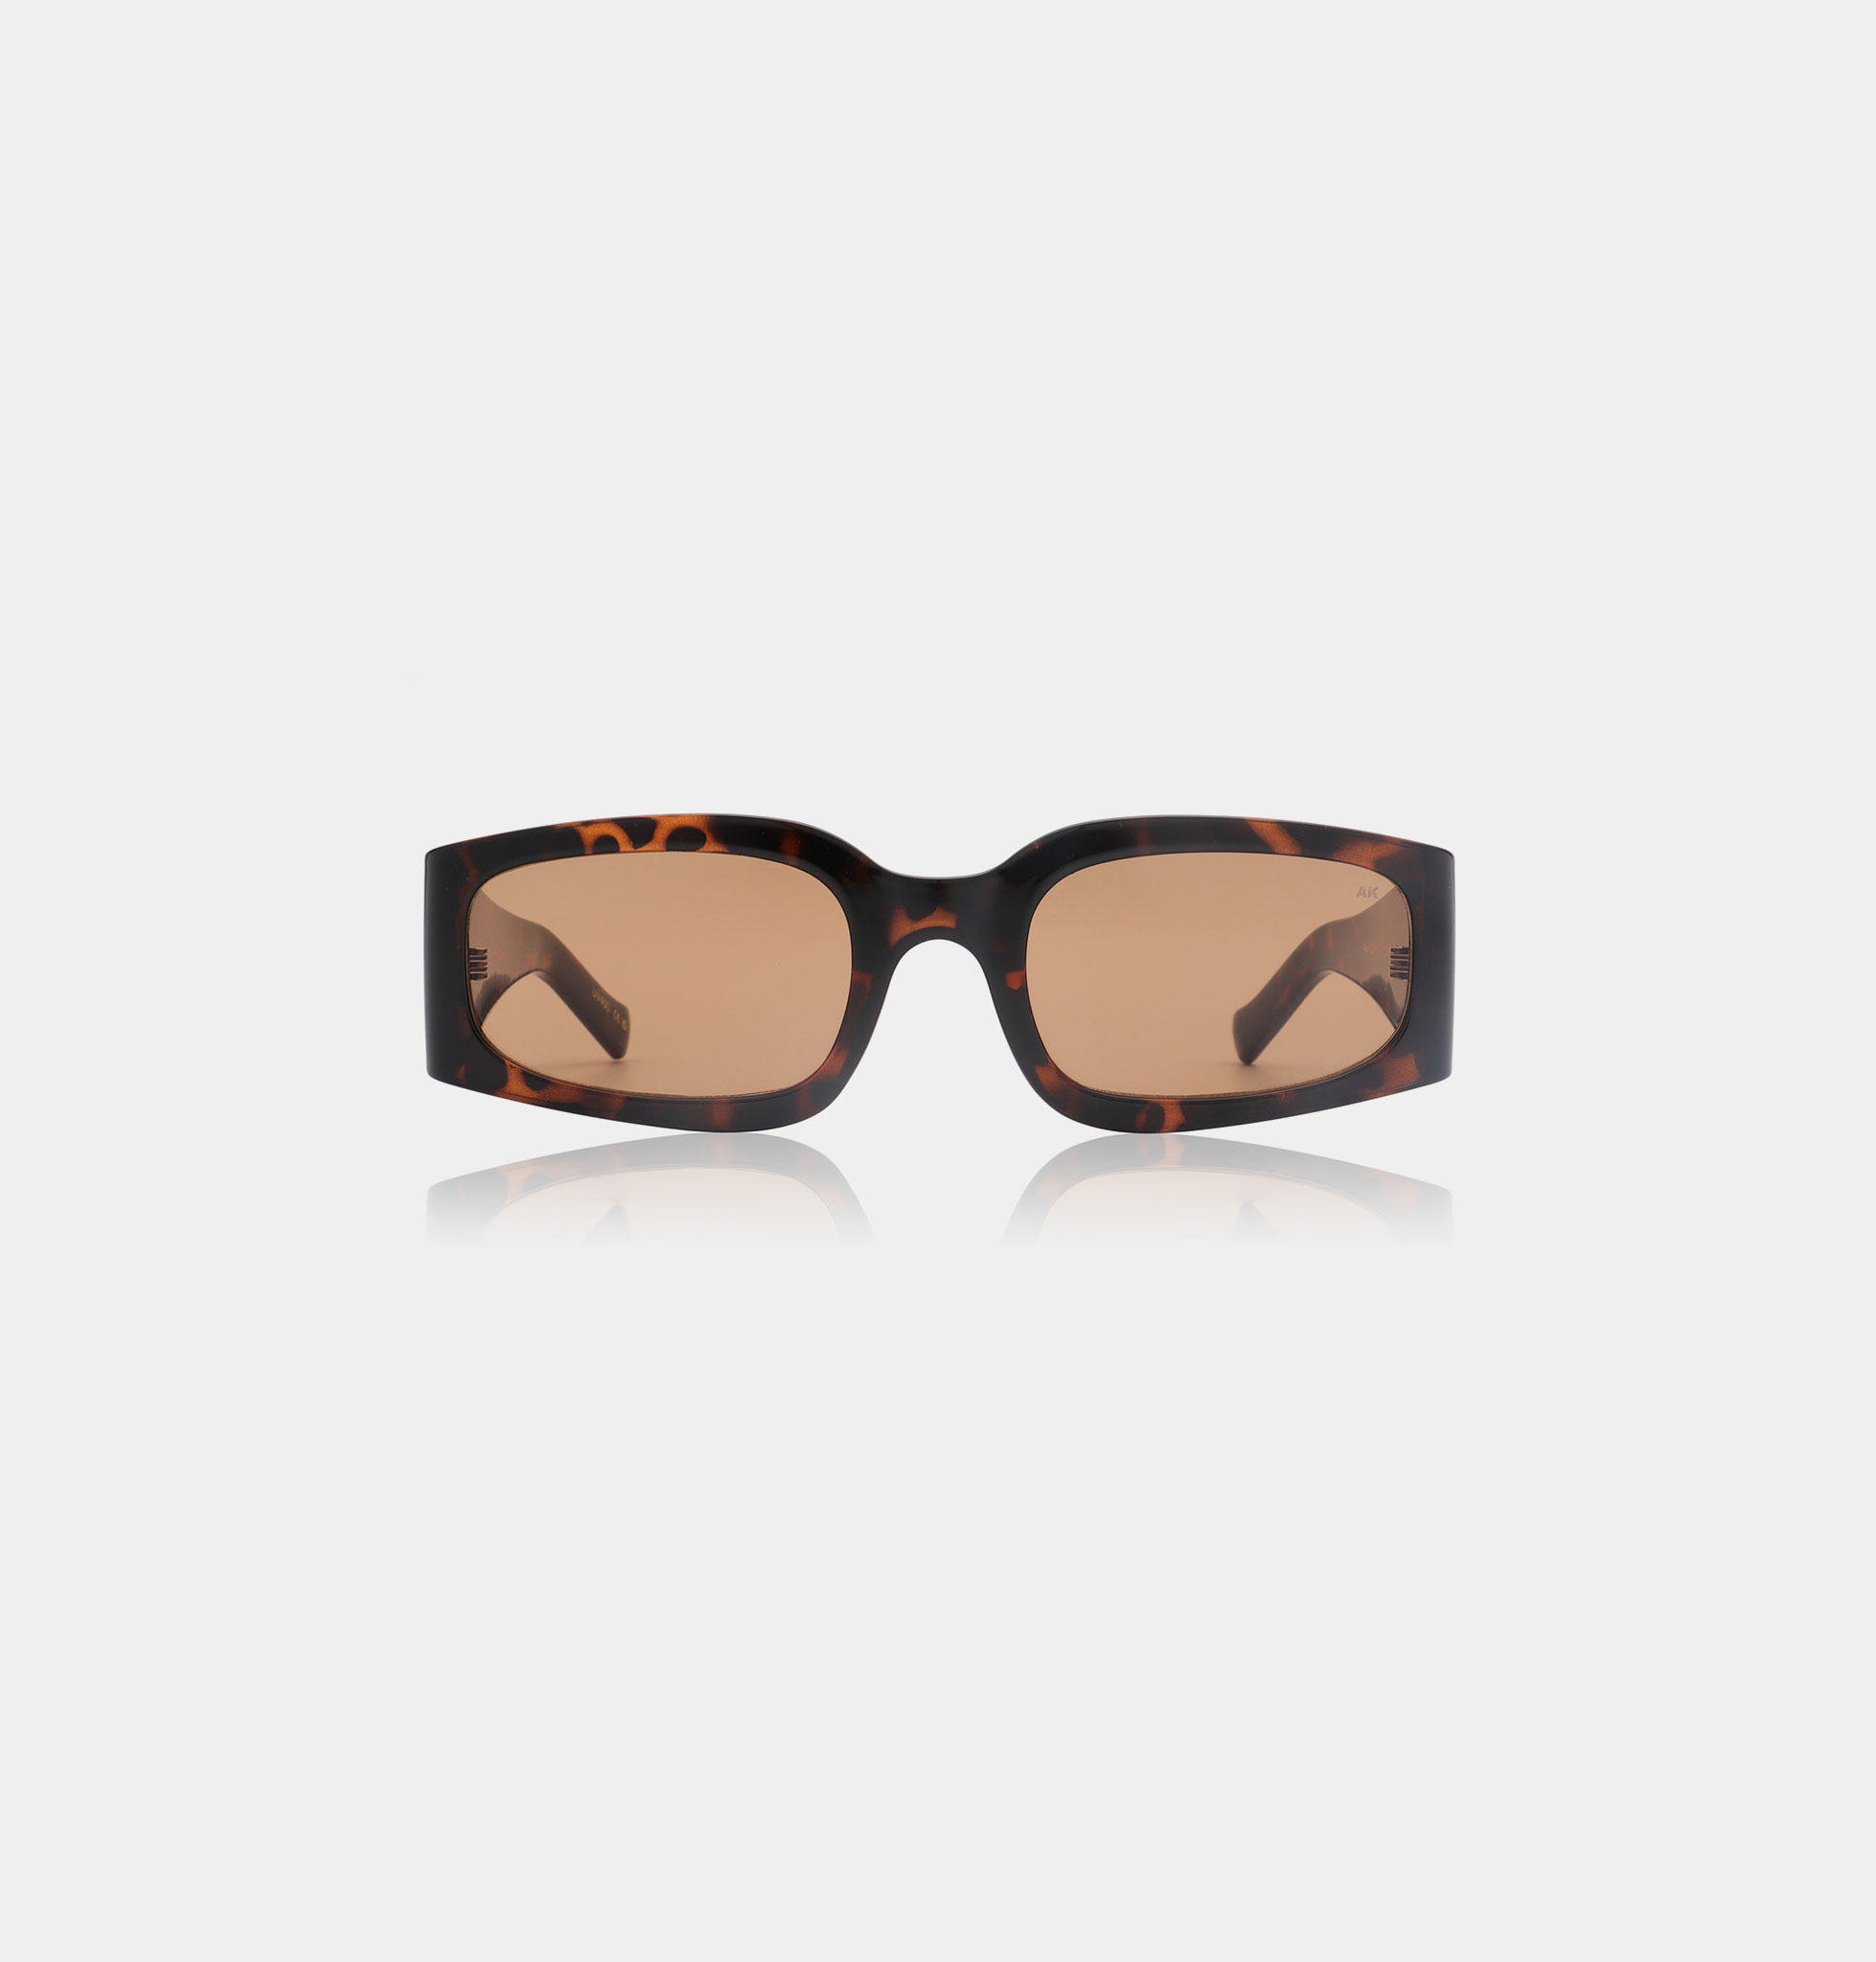 A.Kjaerbede zonnebril model ALEX kleur TORTOISE met BRONZE glazen AKsunnies bril sunglasses eyewear